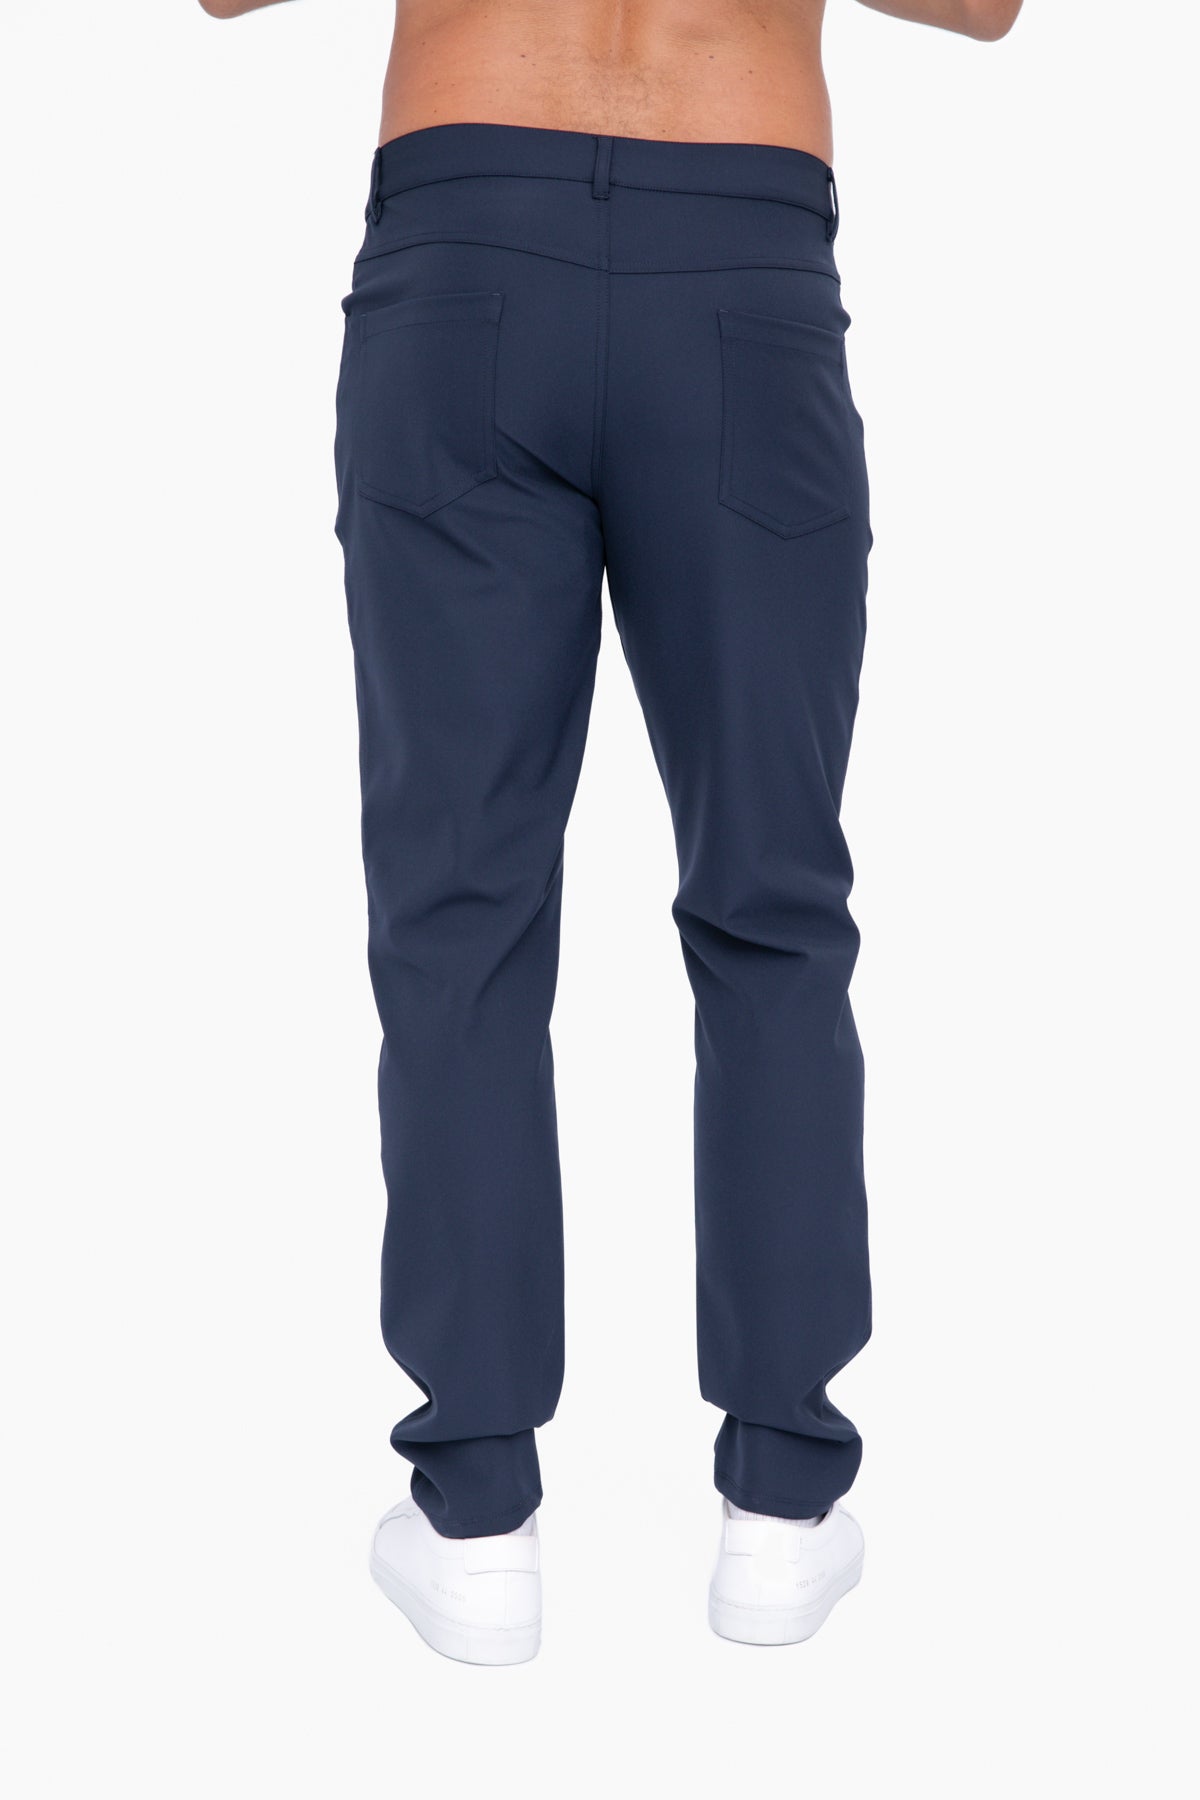 MEN'S - 5 Pocket Golf Pants - Navy